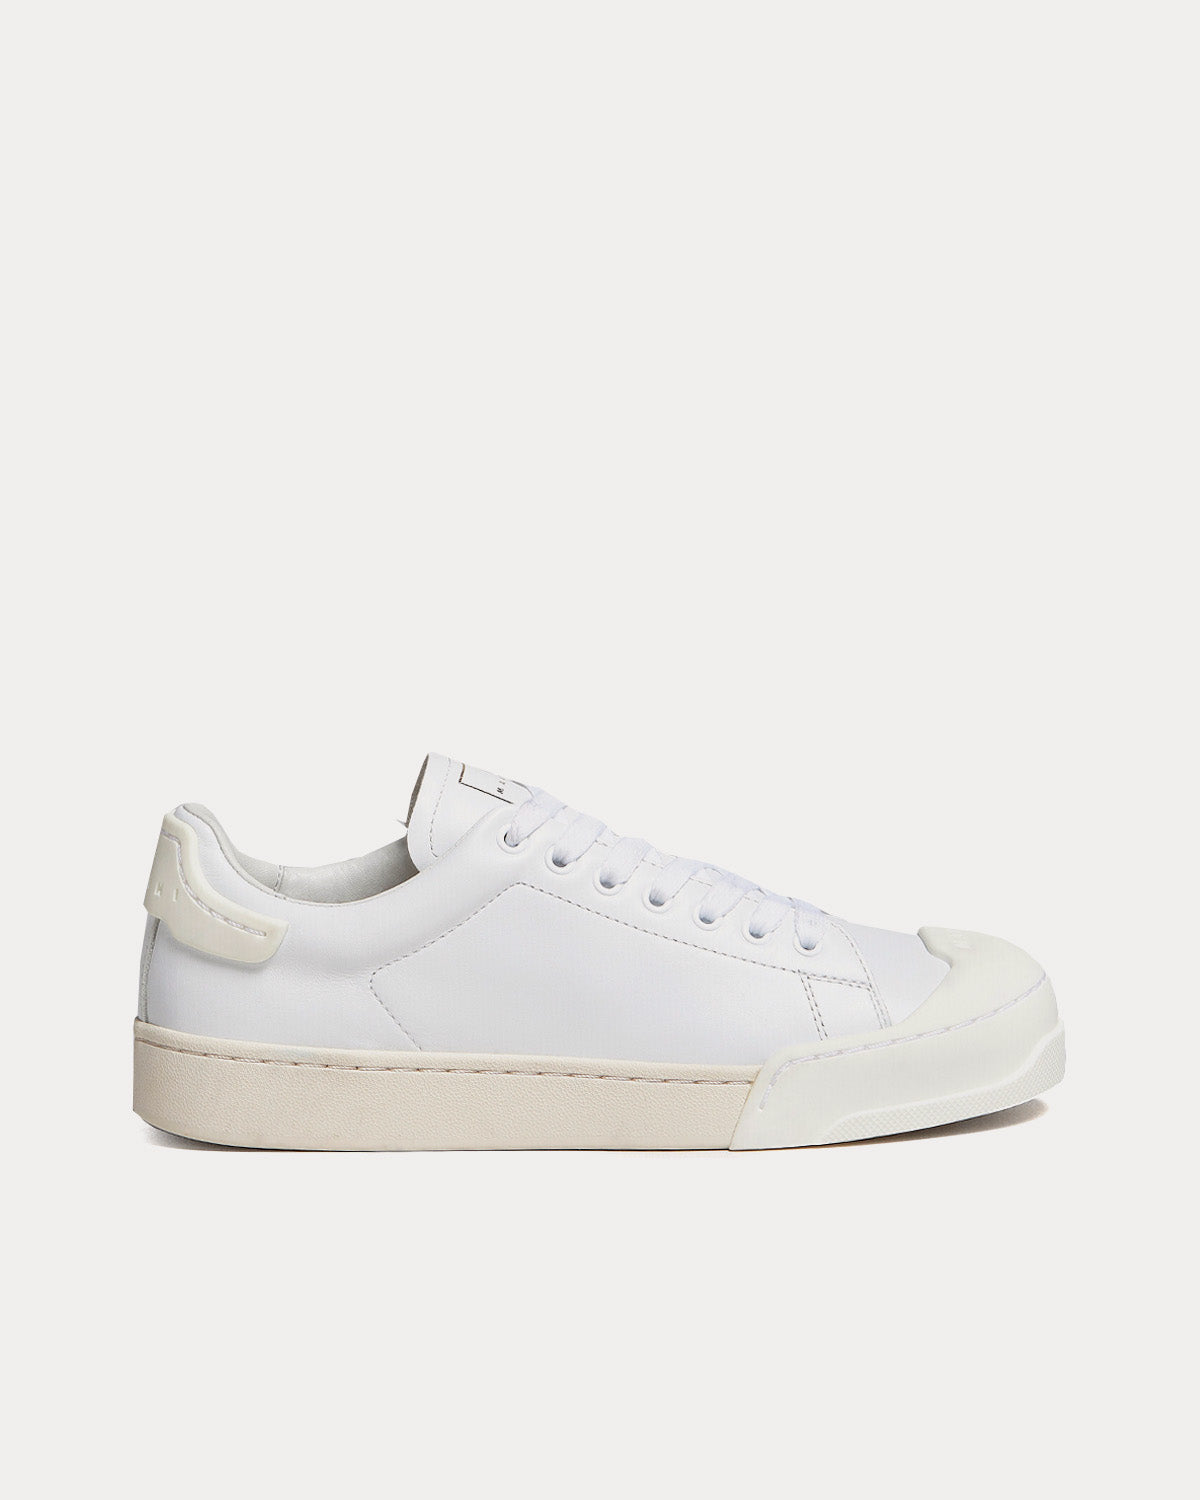 Marni - Dada Bumper White / White Low Top Sneakers